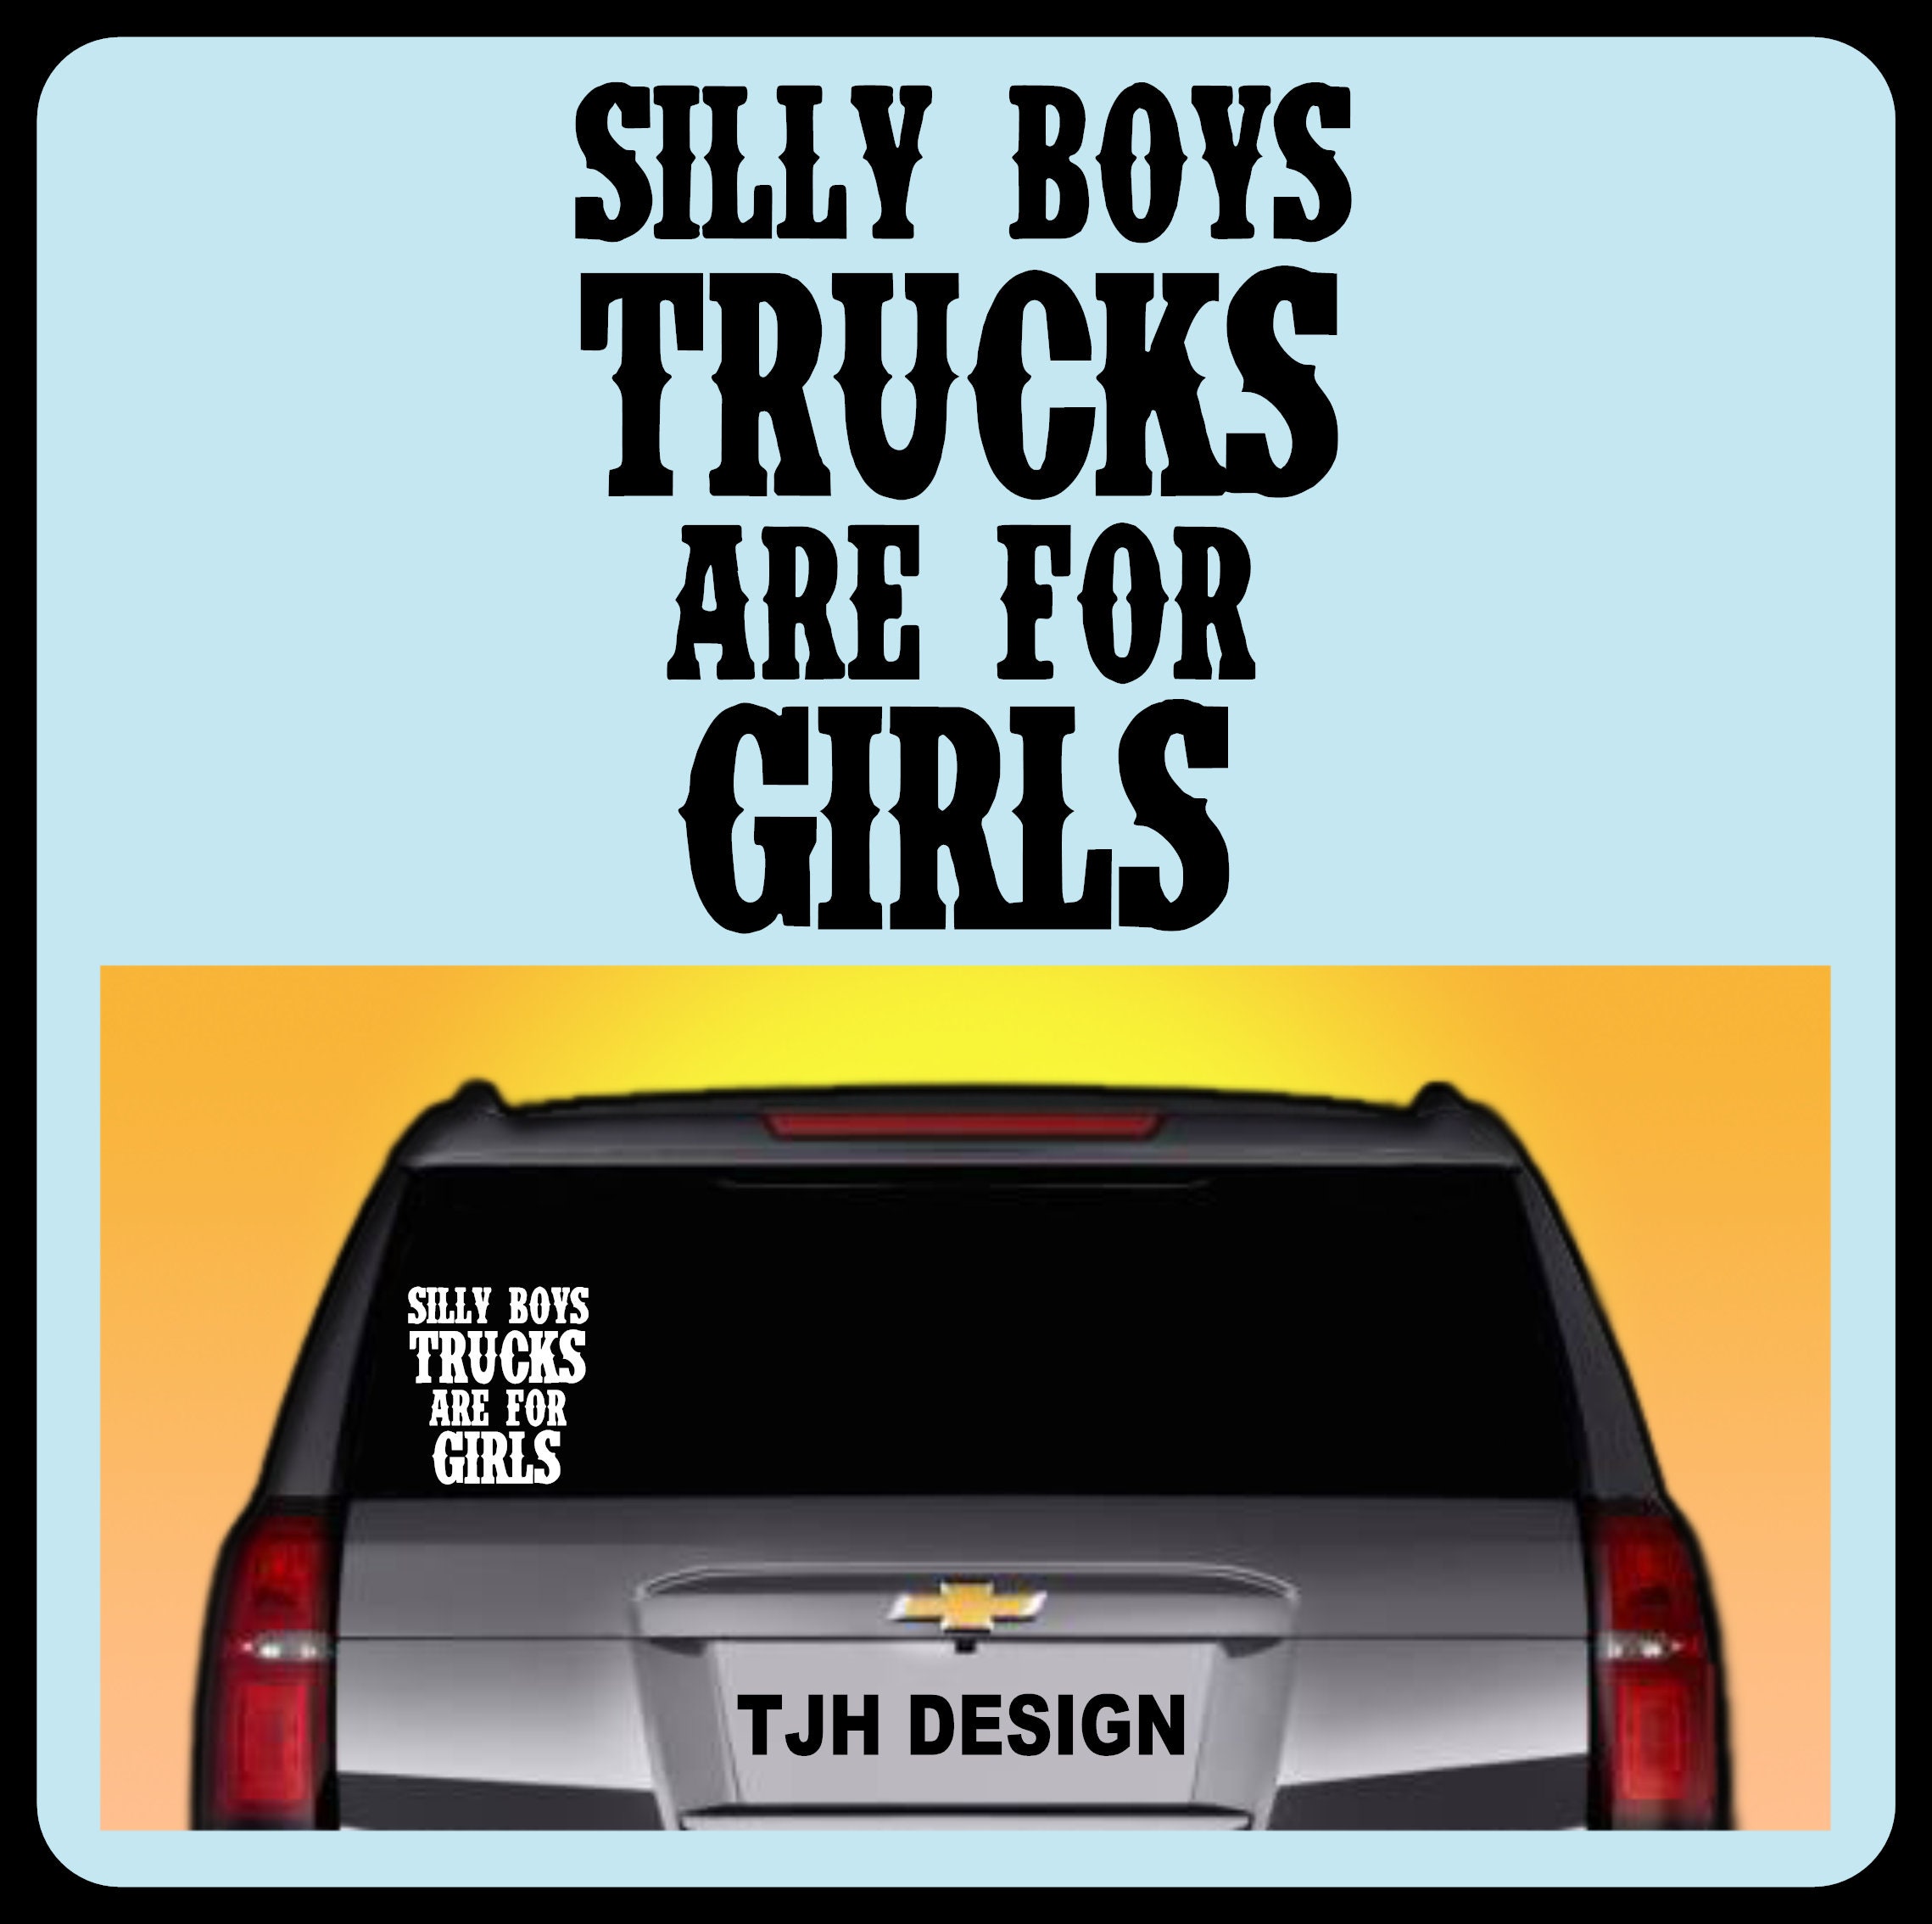 Shrek Meme Sticker - Sticker Graphic - Auto, Wall, Laptop, Cell, Truck  Sticker for Windows, Cars, Trucks